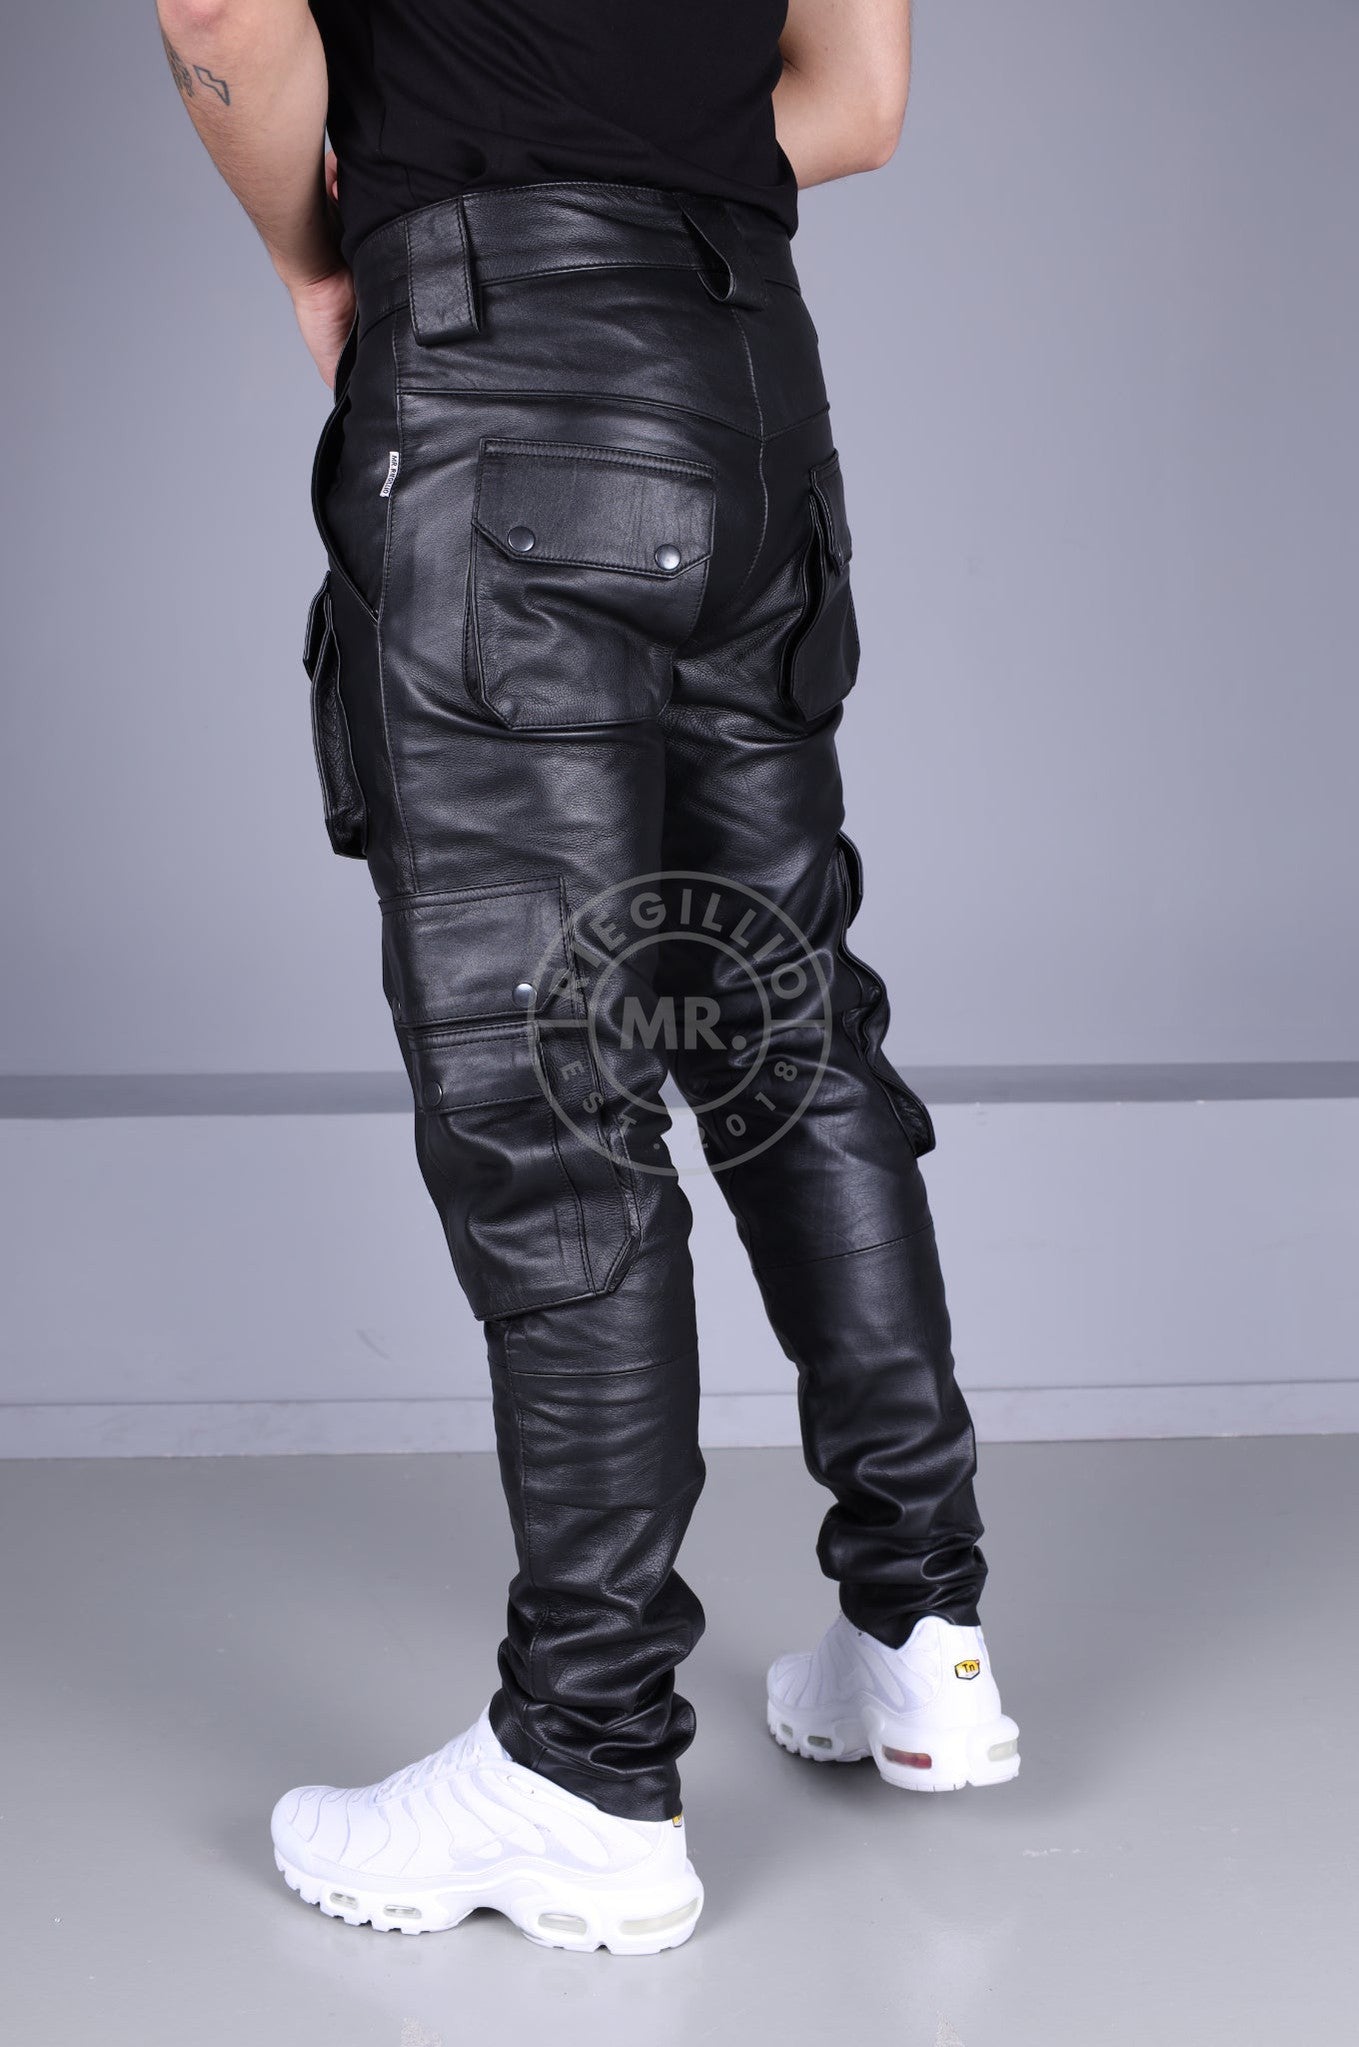 Black Leather Pants - Snap Pockets